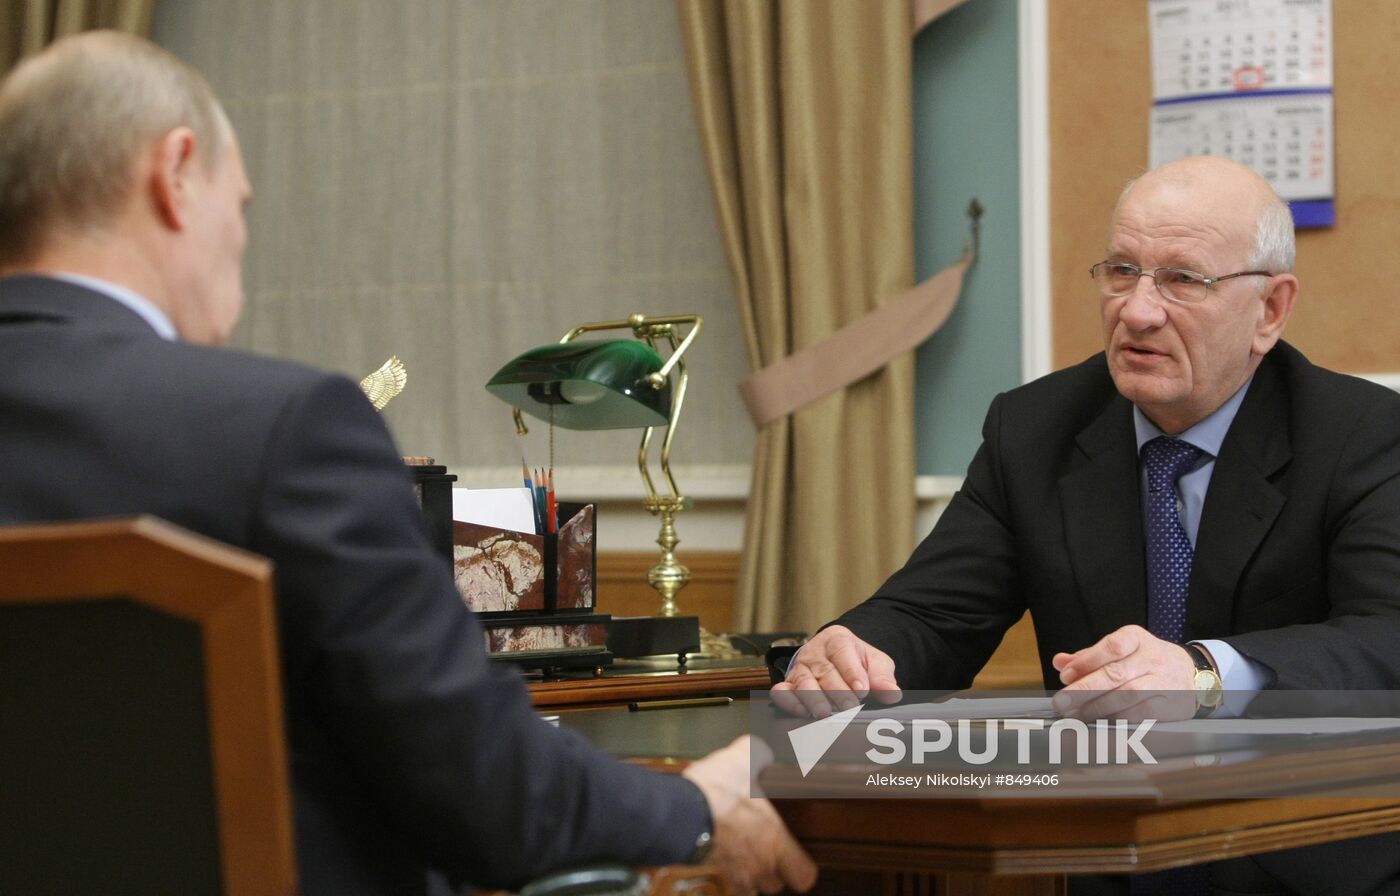 Vladimir Putin meets with Yury Berg